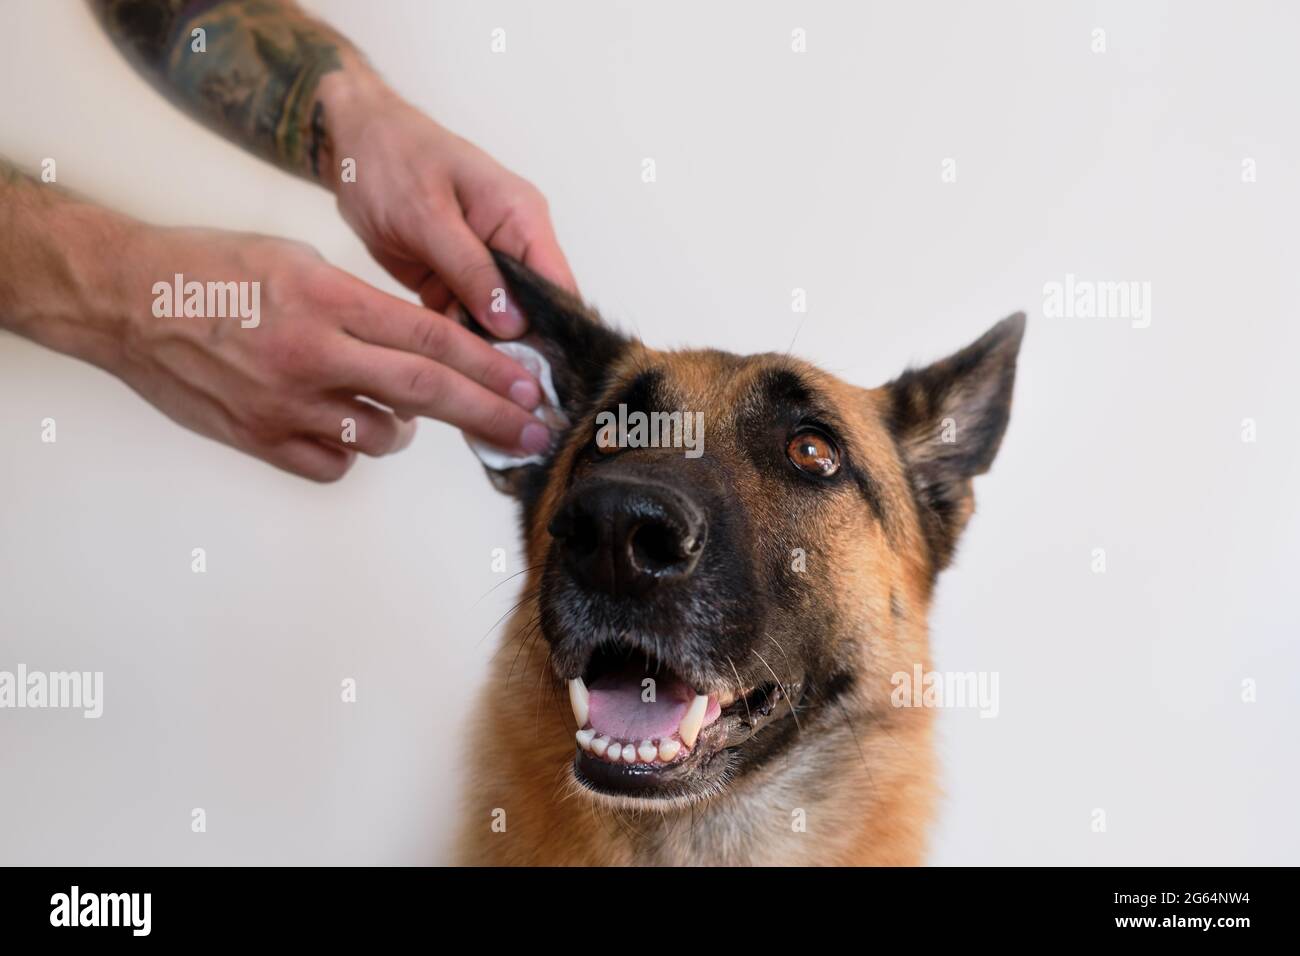 how do you clean german shepherds ears